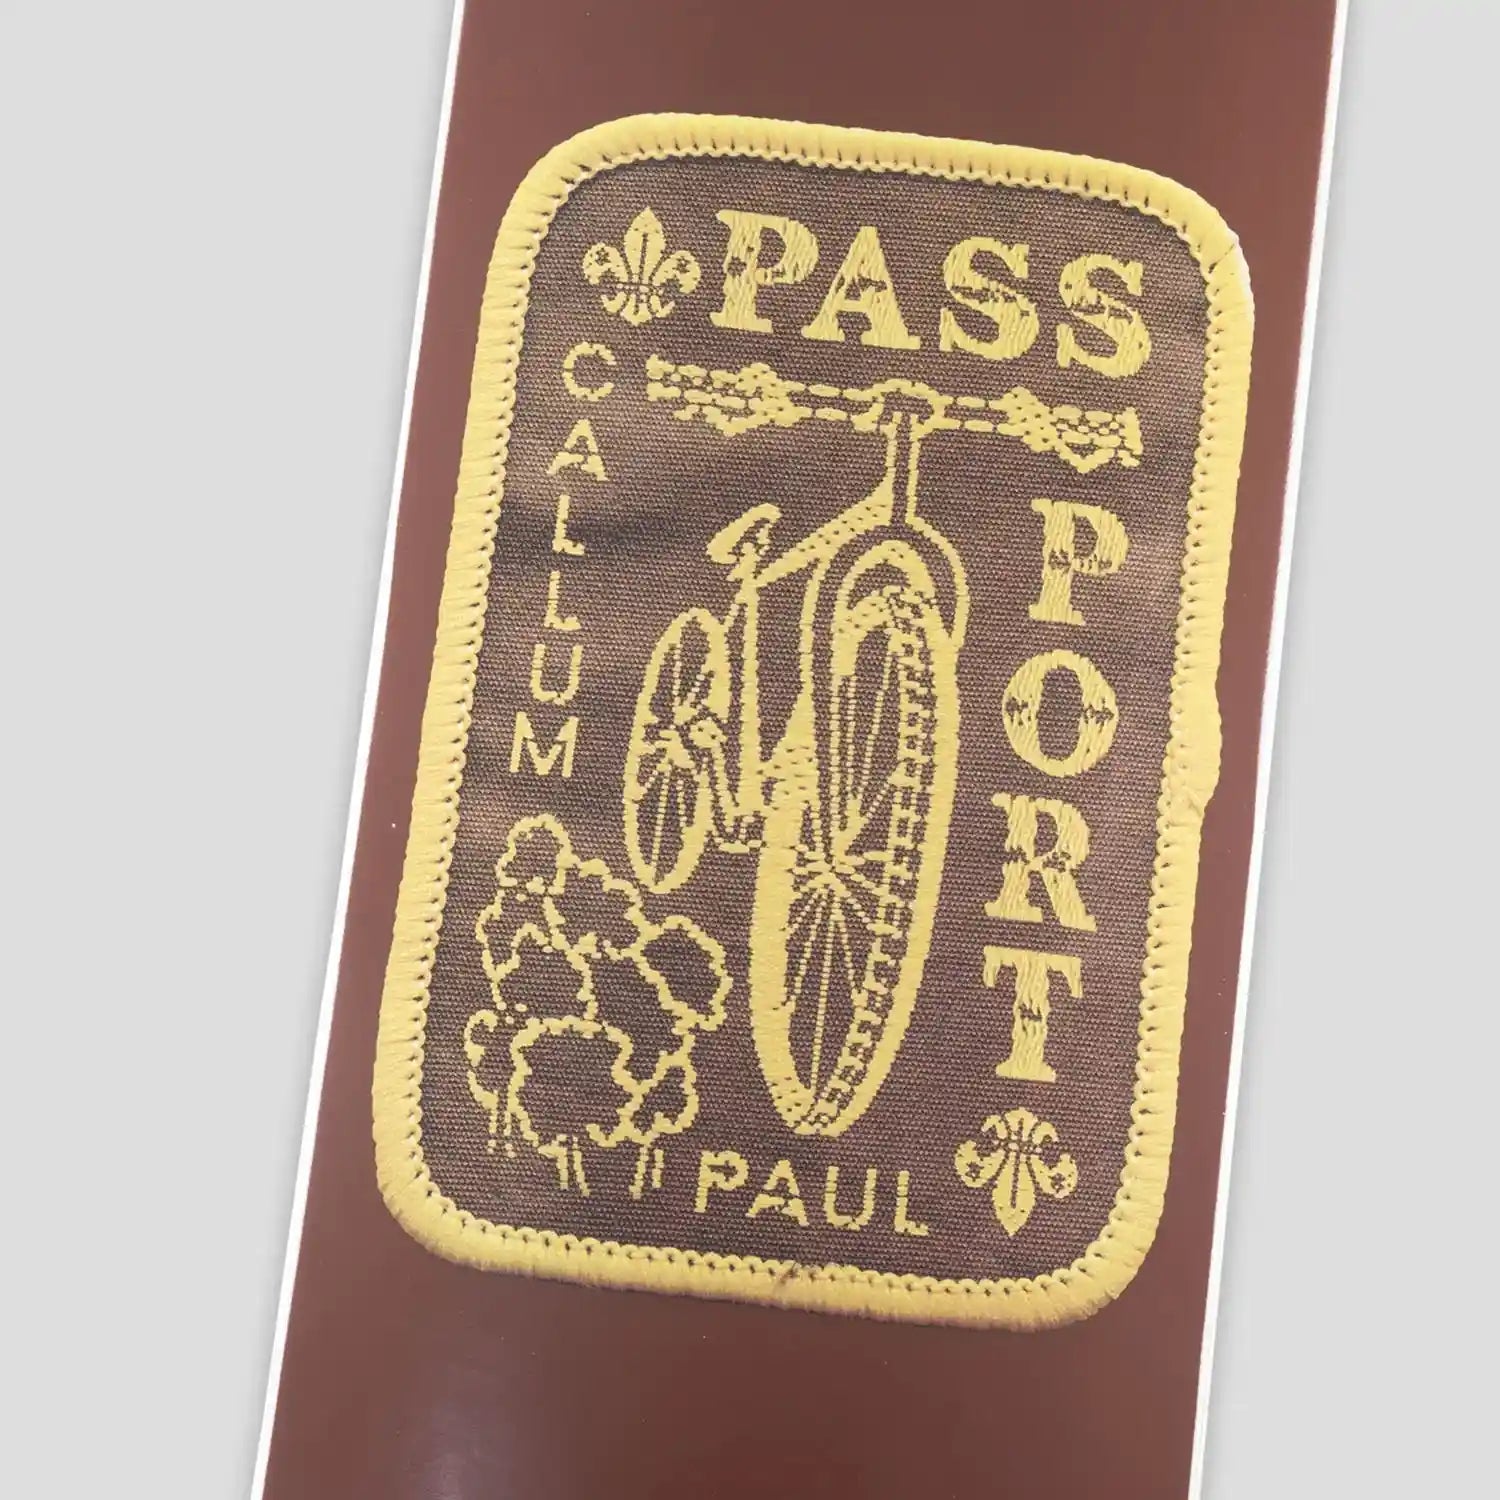 Passport Callum Paul Patch Series Deck (8.5") - Tiki Room Skateboards - 2